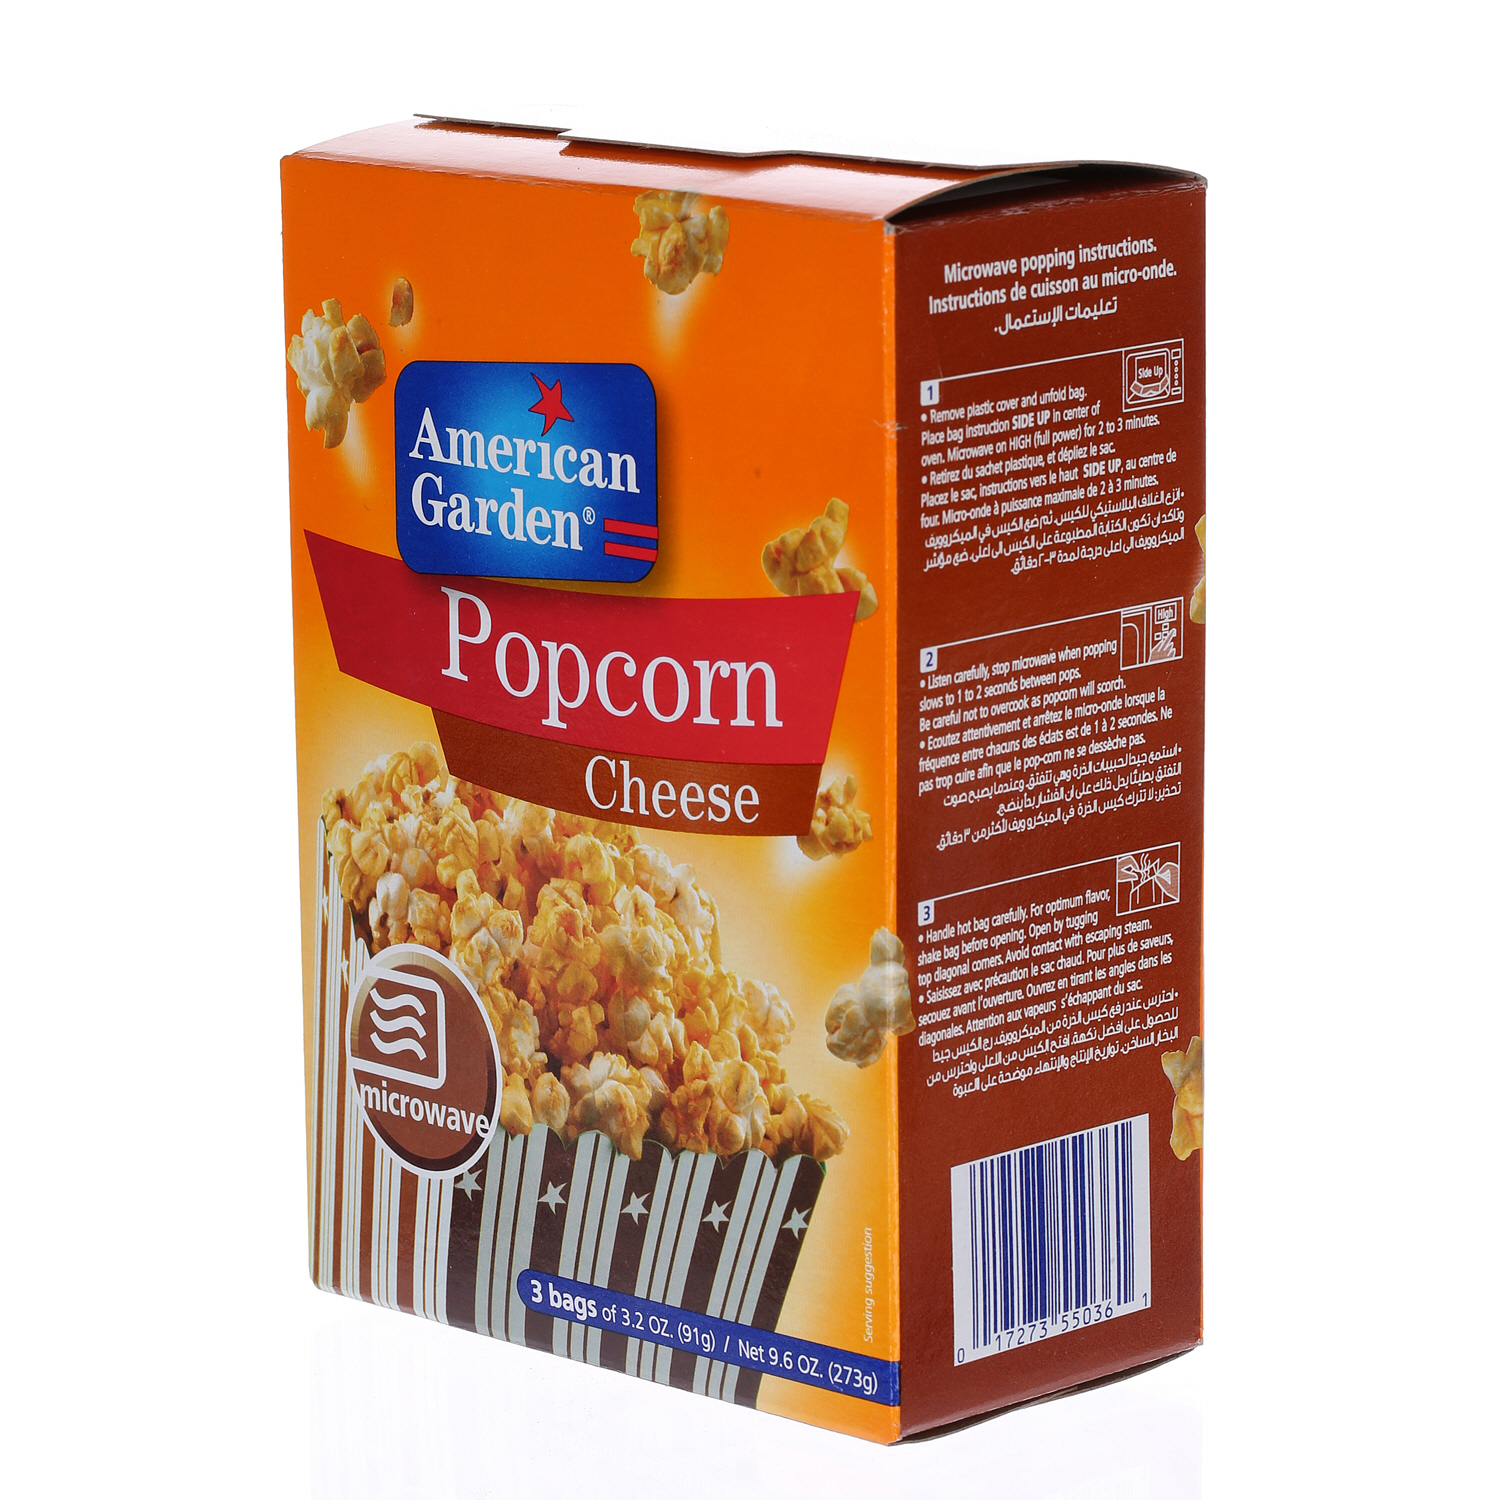 American Garden Microwave Popcorn Cheese  3.5Oz